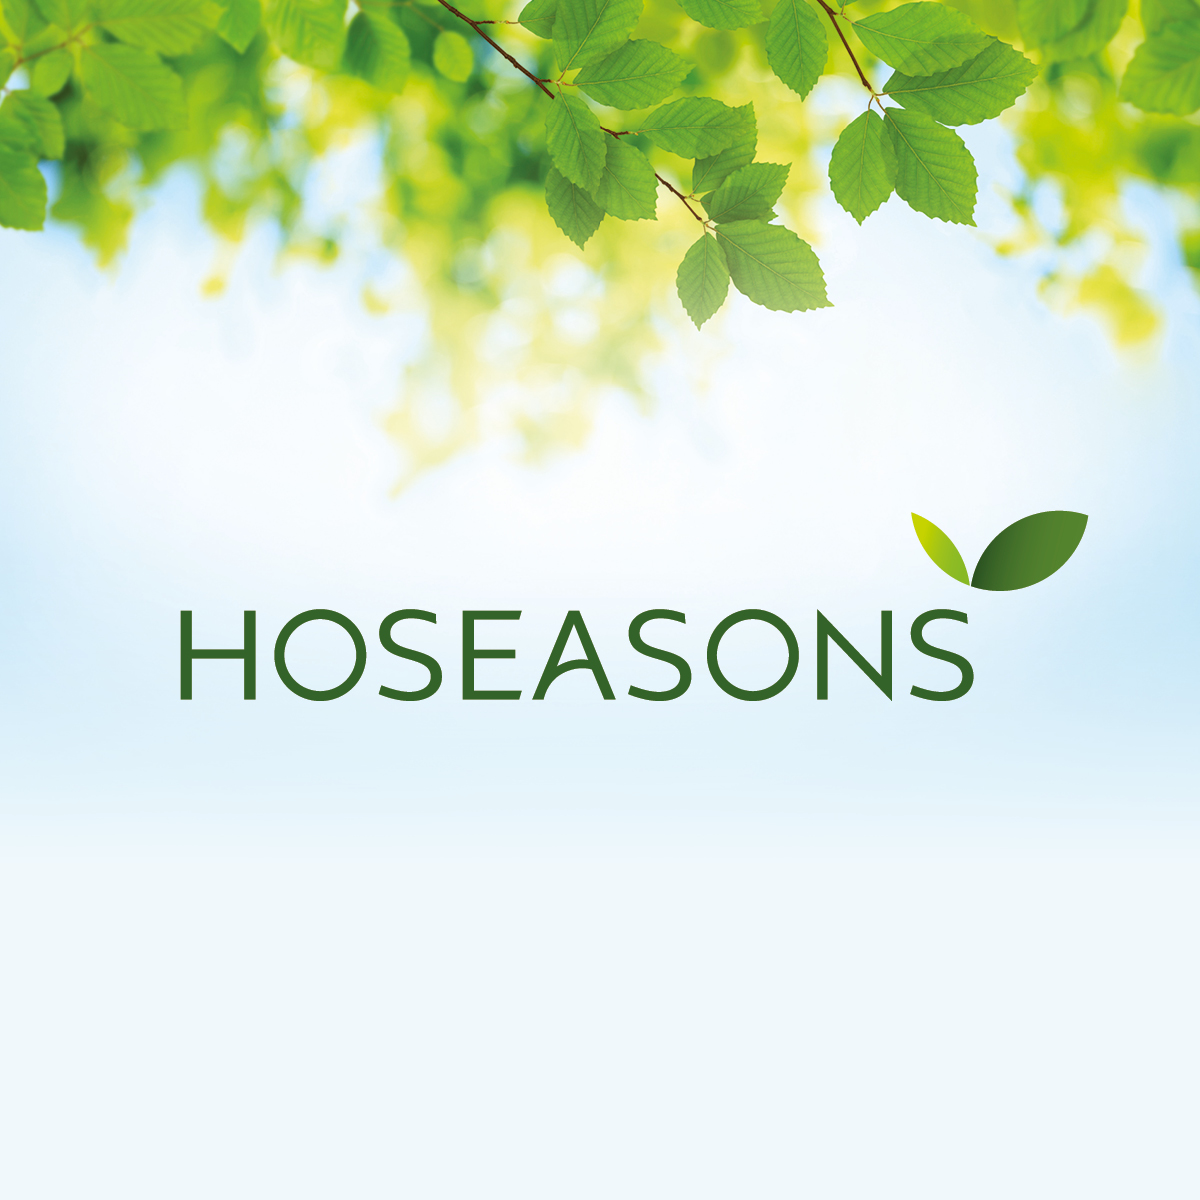 Hoseasons Rebrand